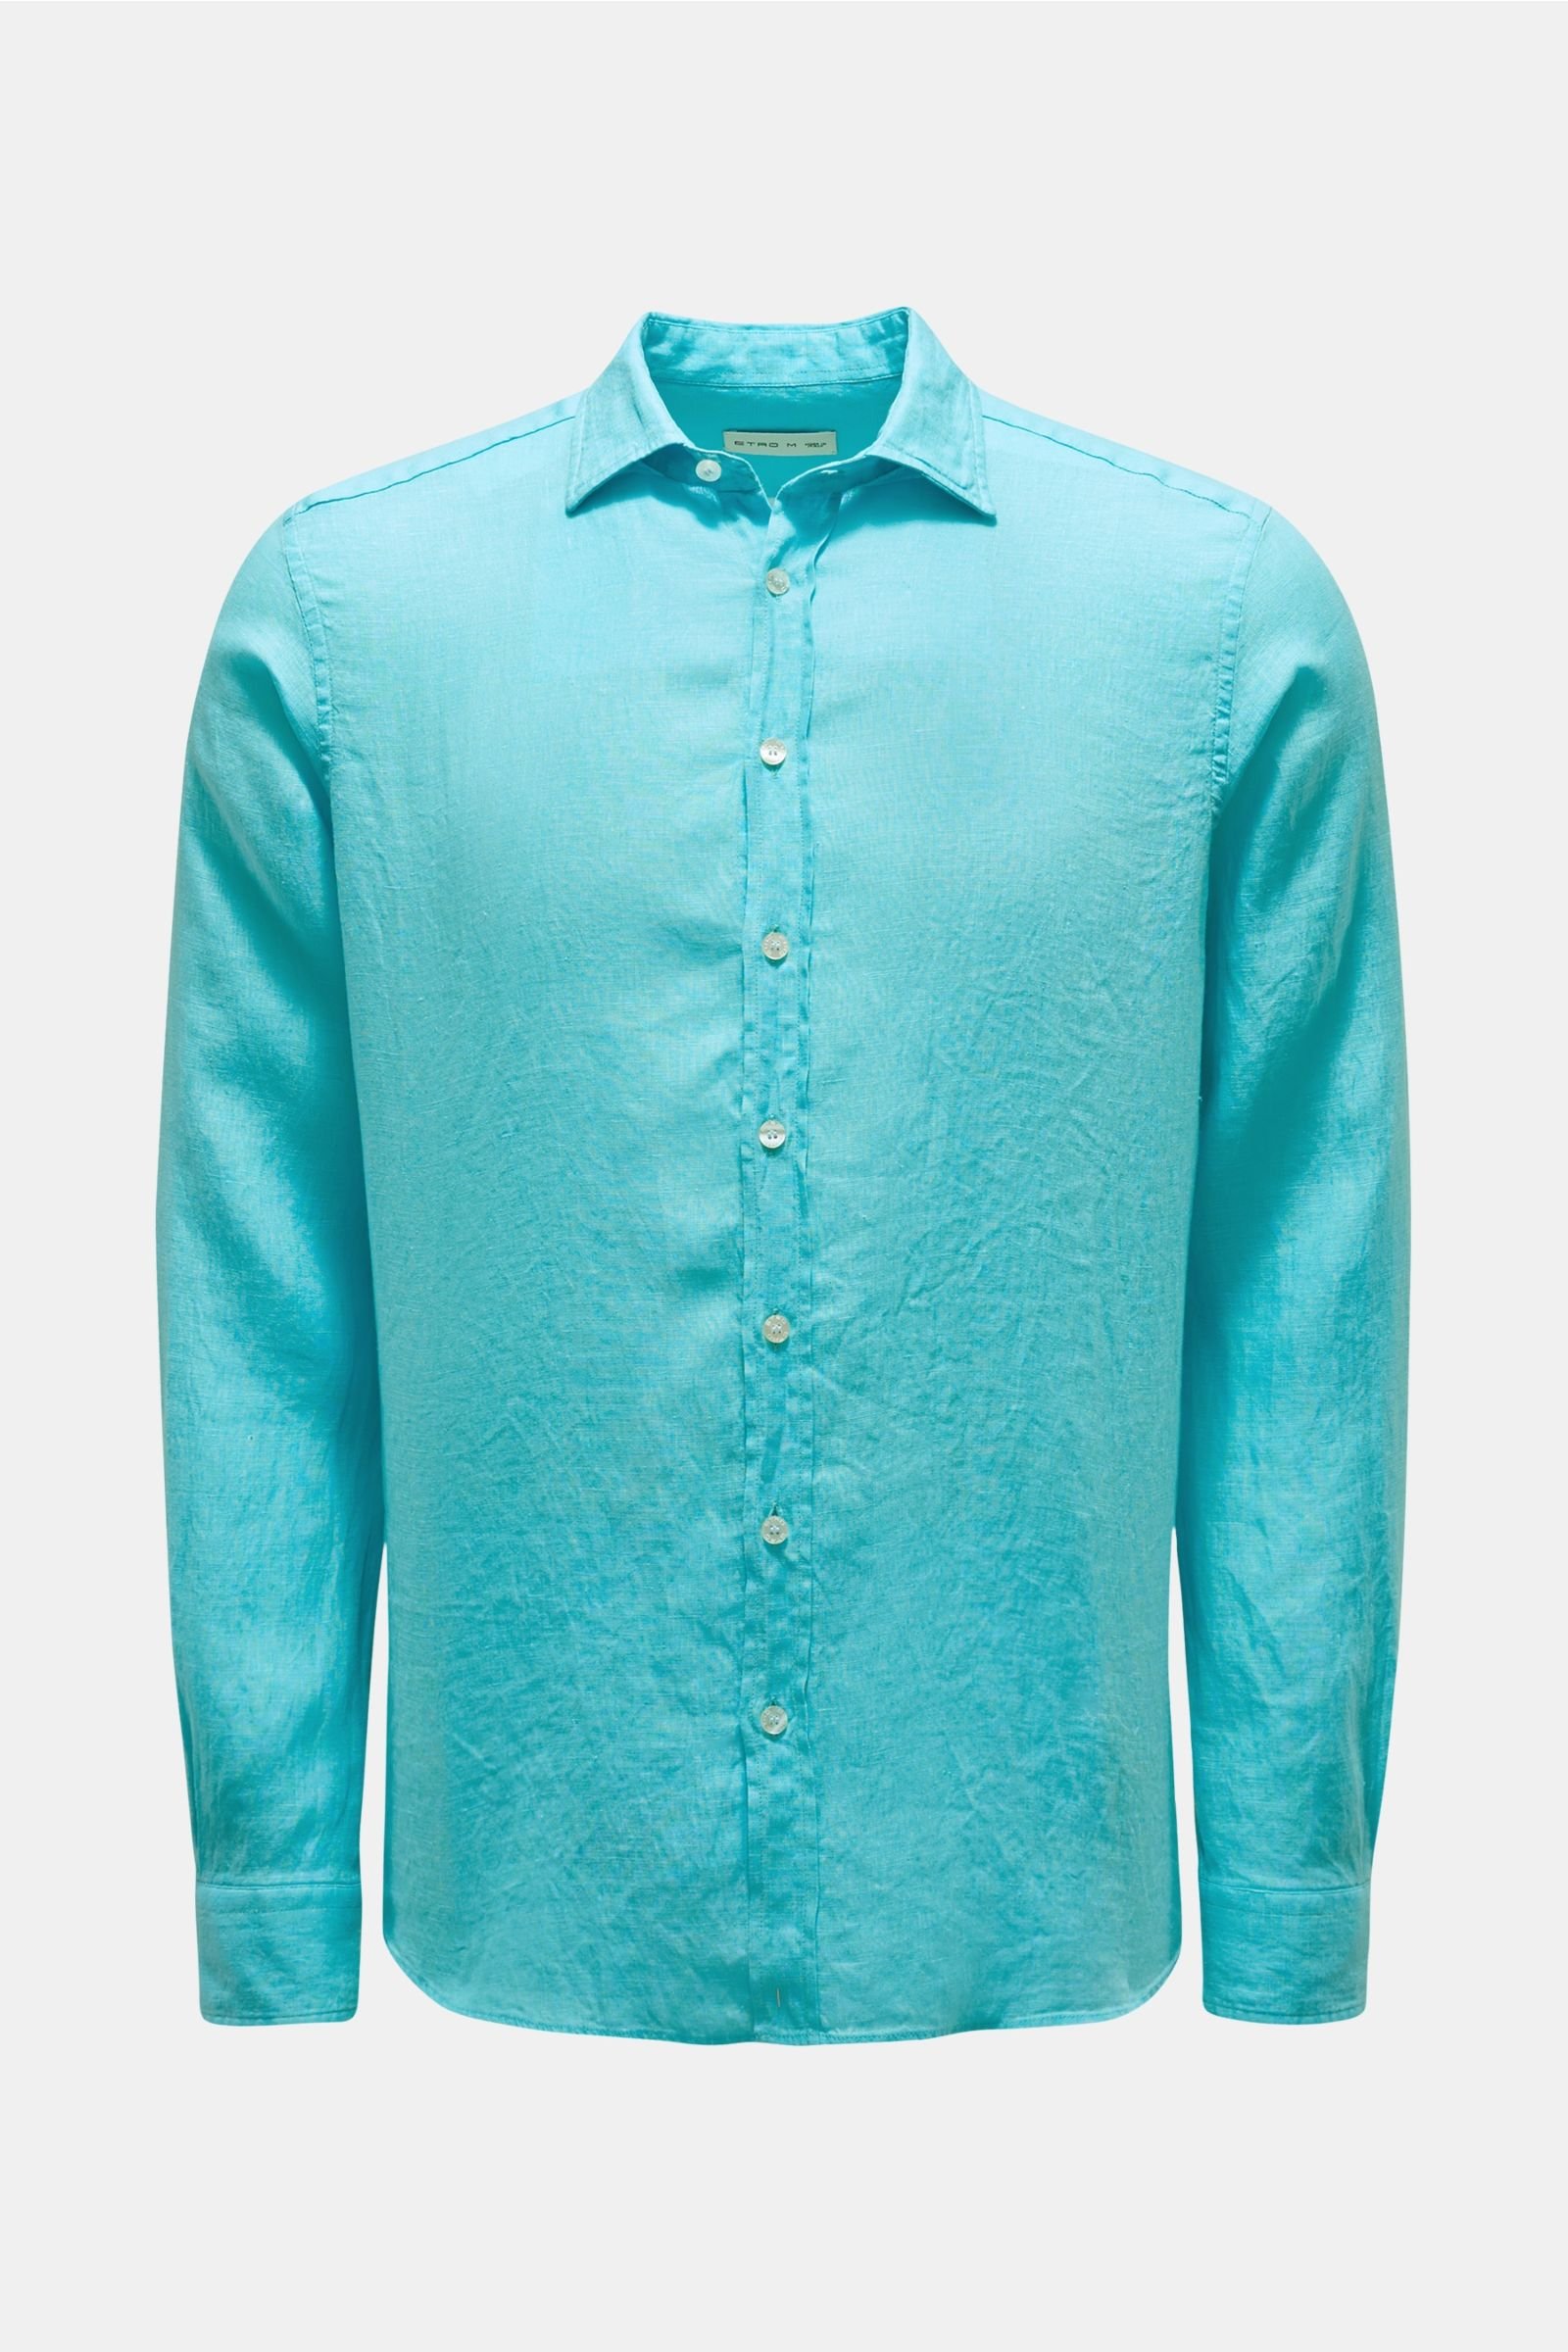 Linen shirt narrow collar turquoise